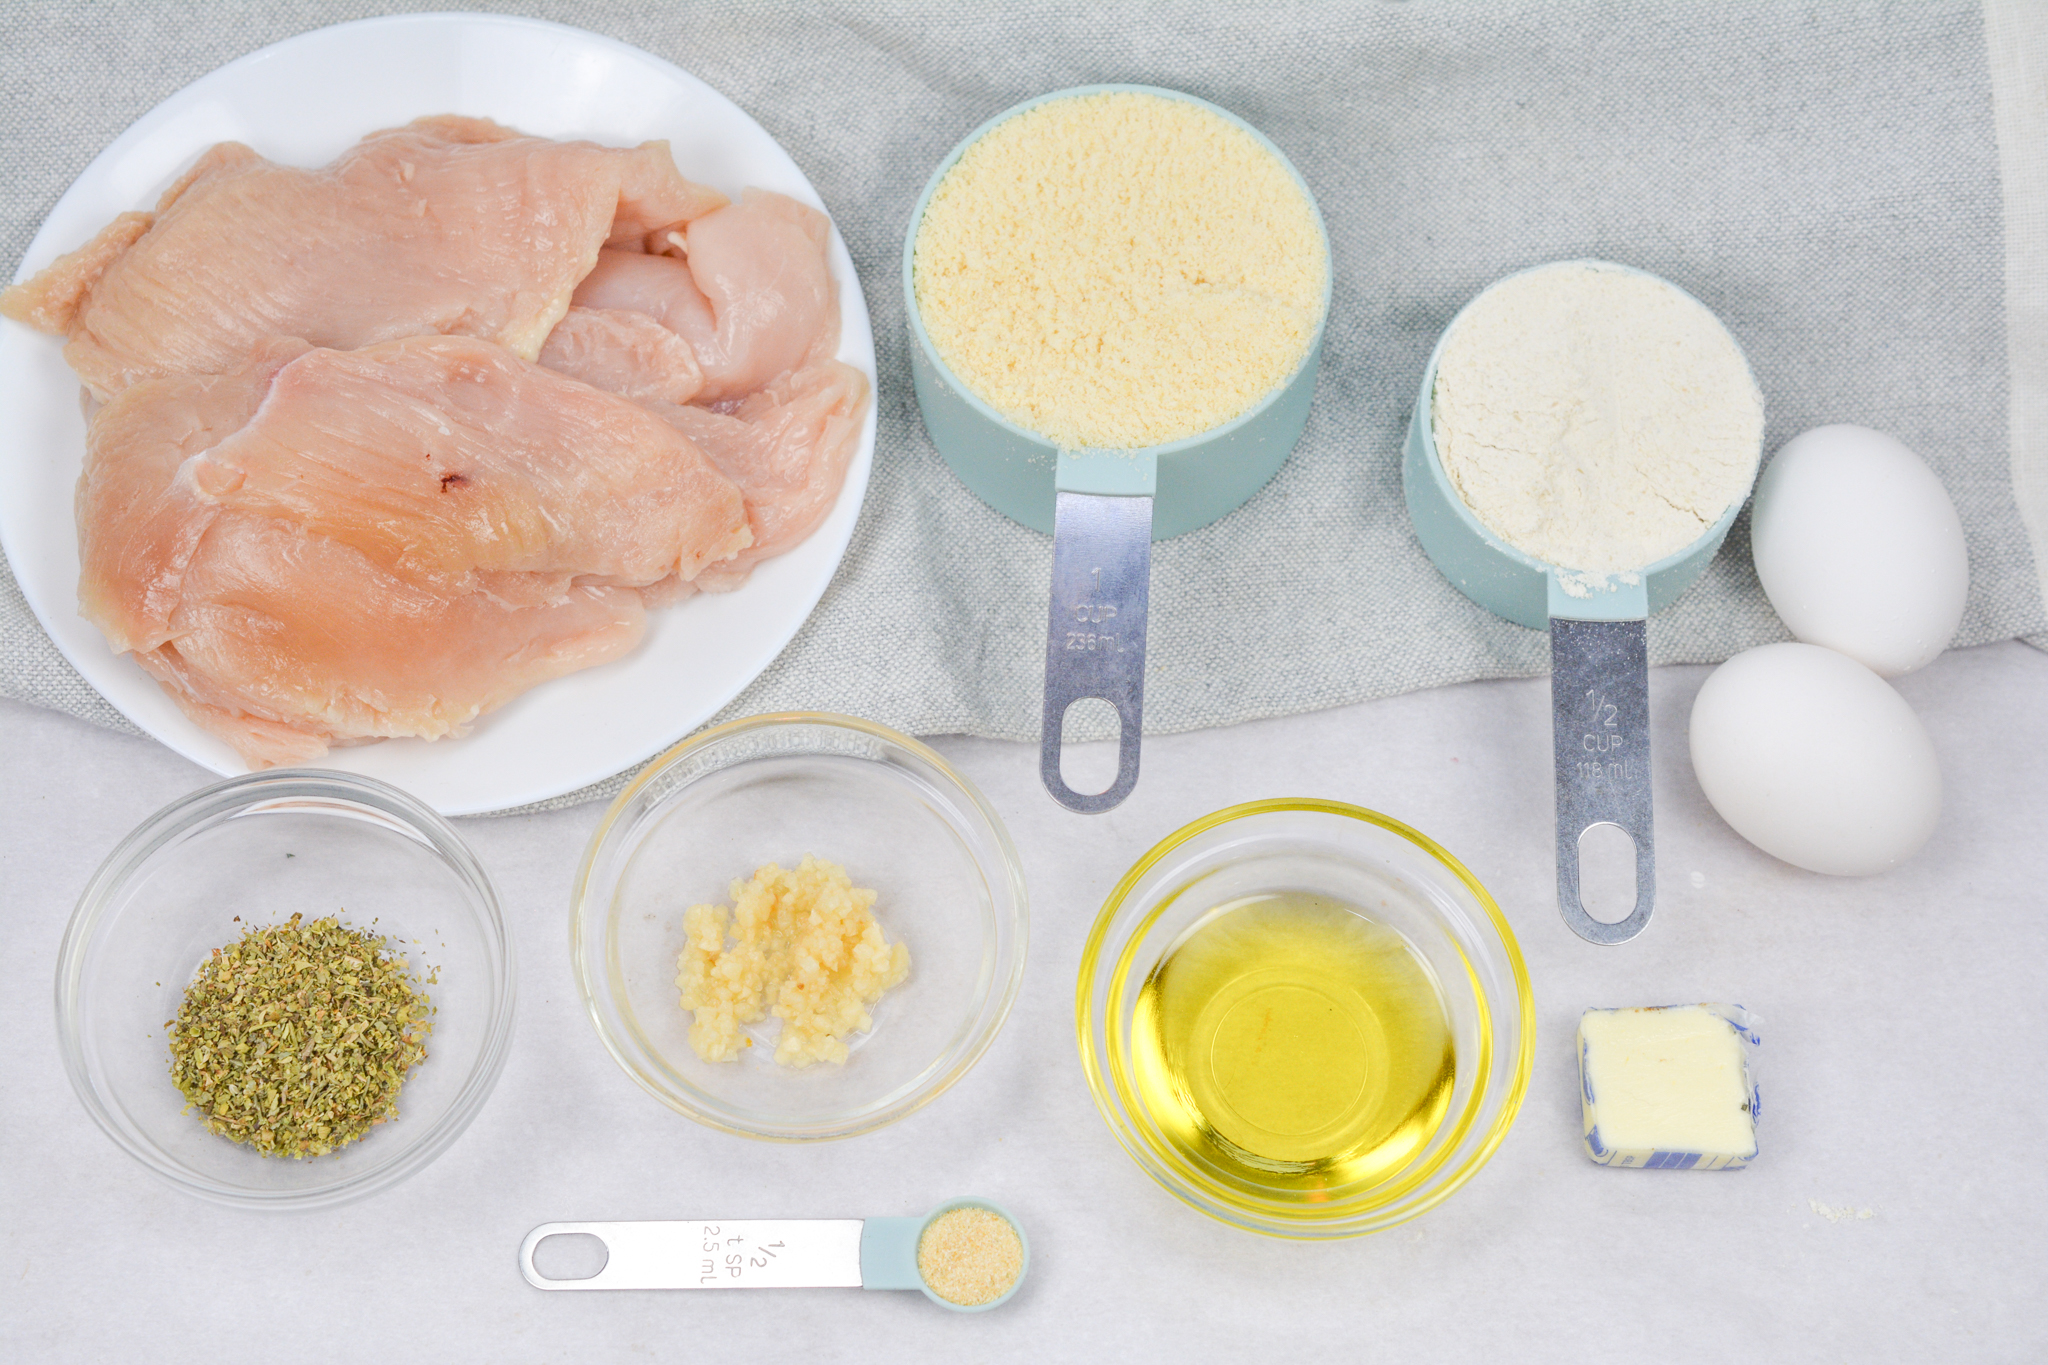 Parmesan Crusted Chicken Recipe Ingredients